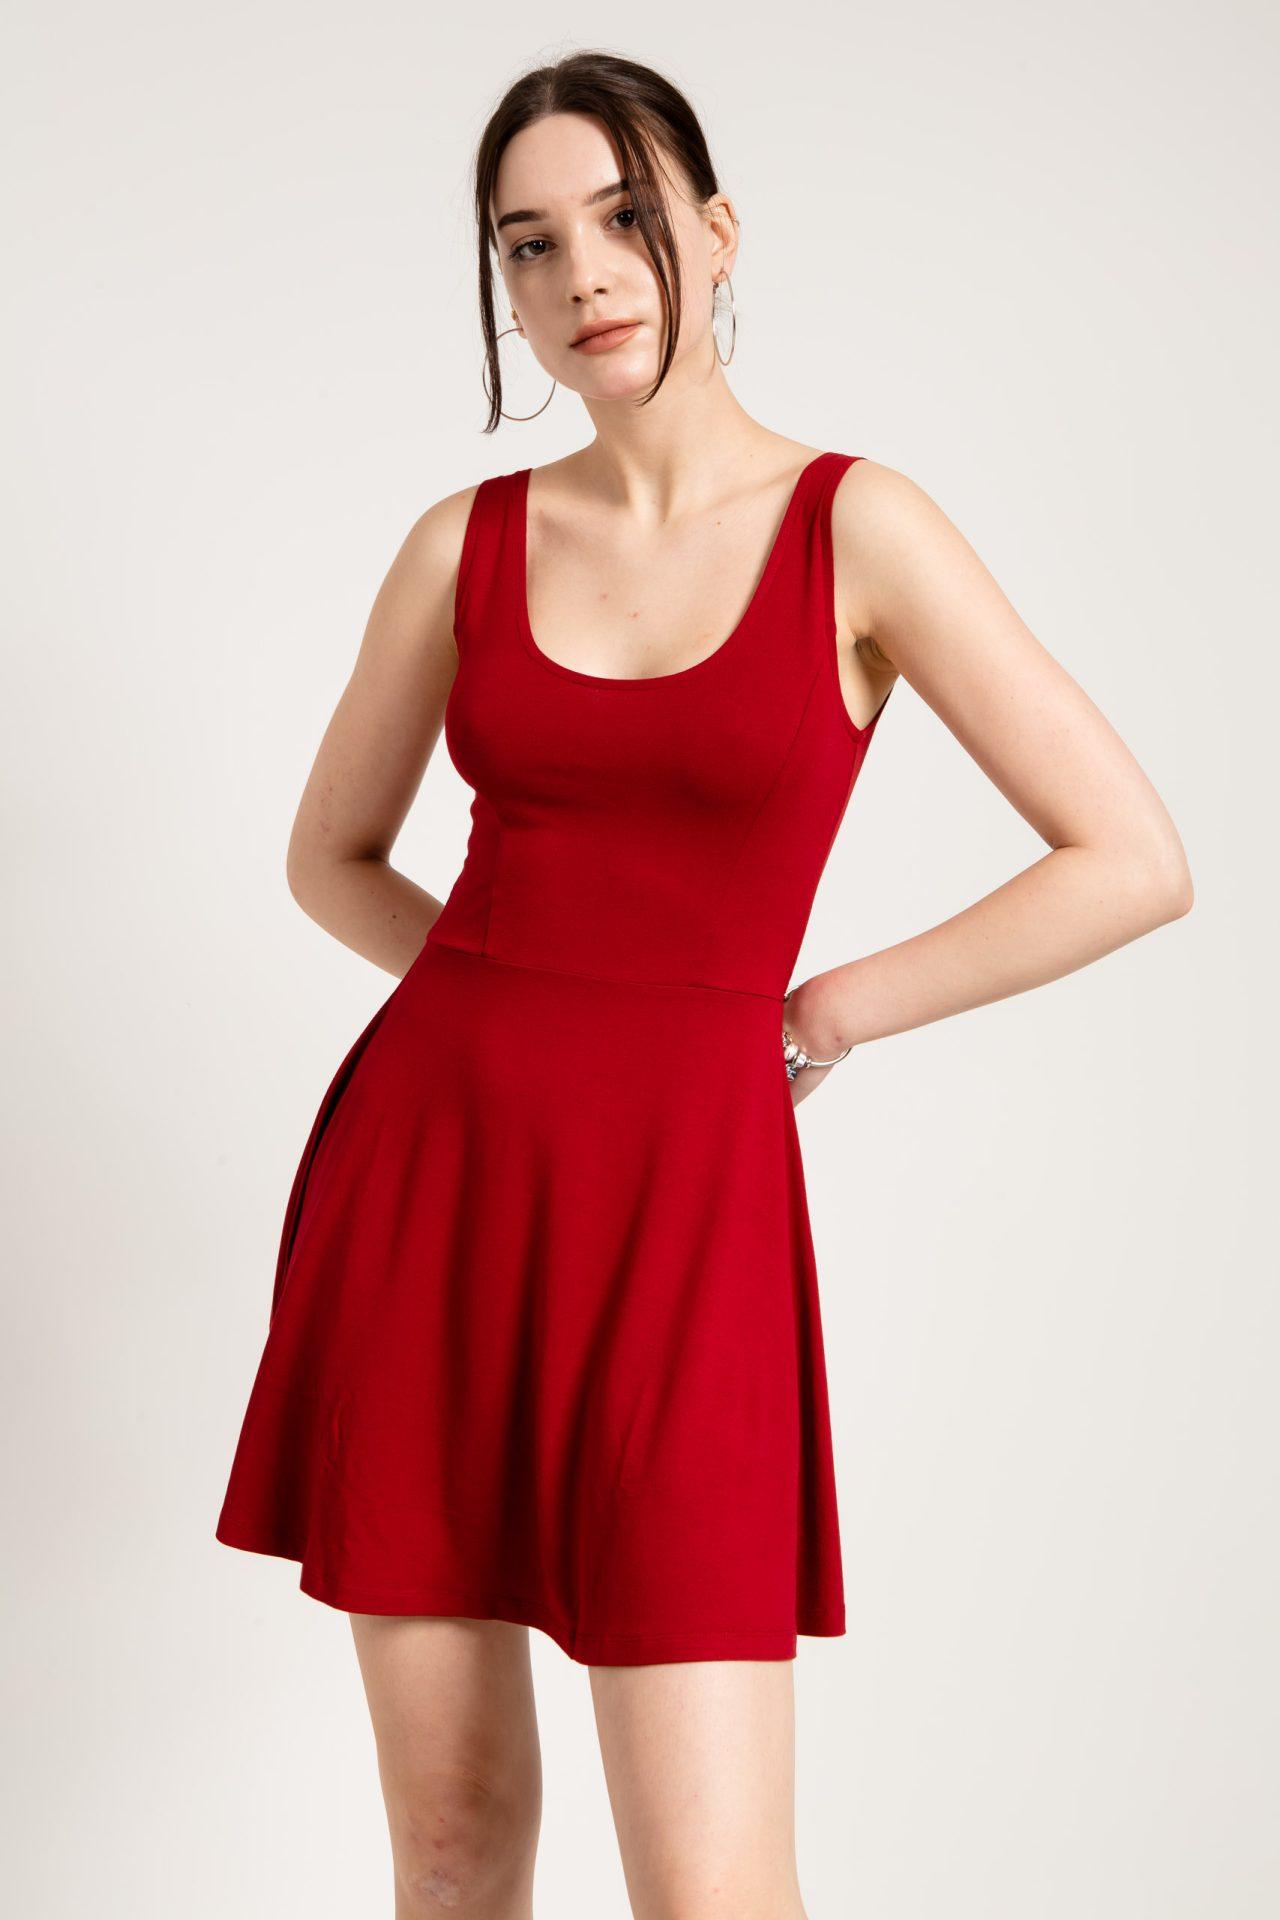 JAHR MARC LONDON мини фустан - црвена боја